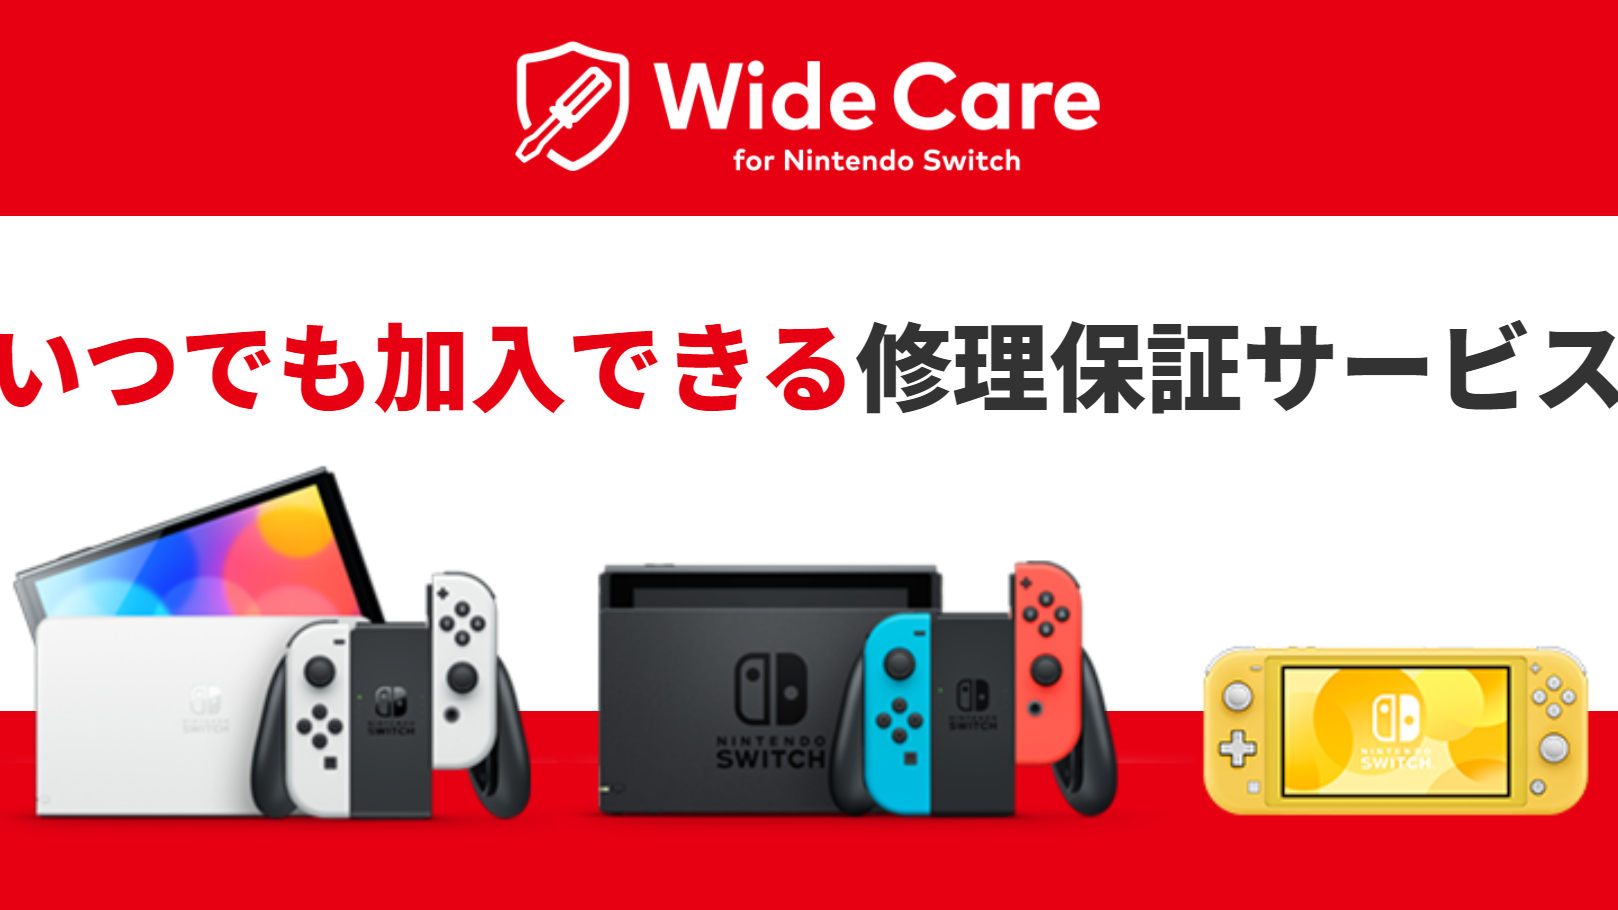 Nintendo Switch Wide Care service